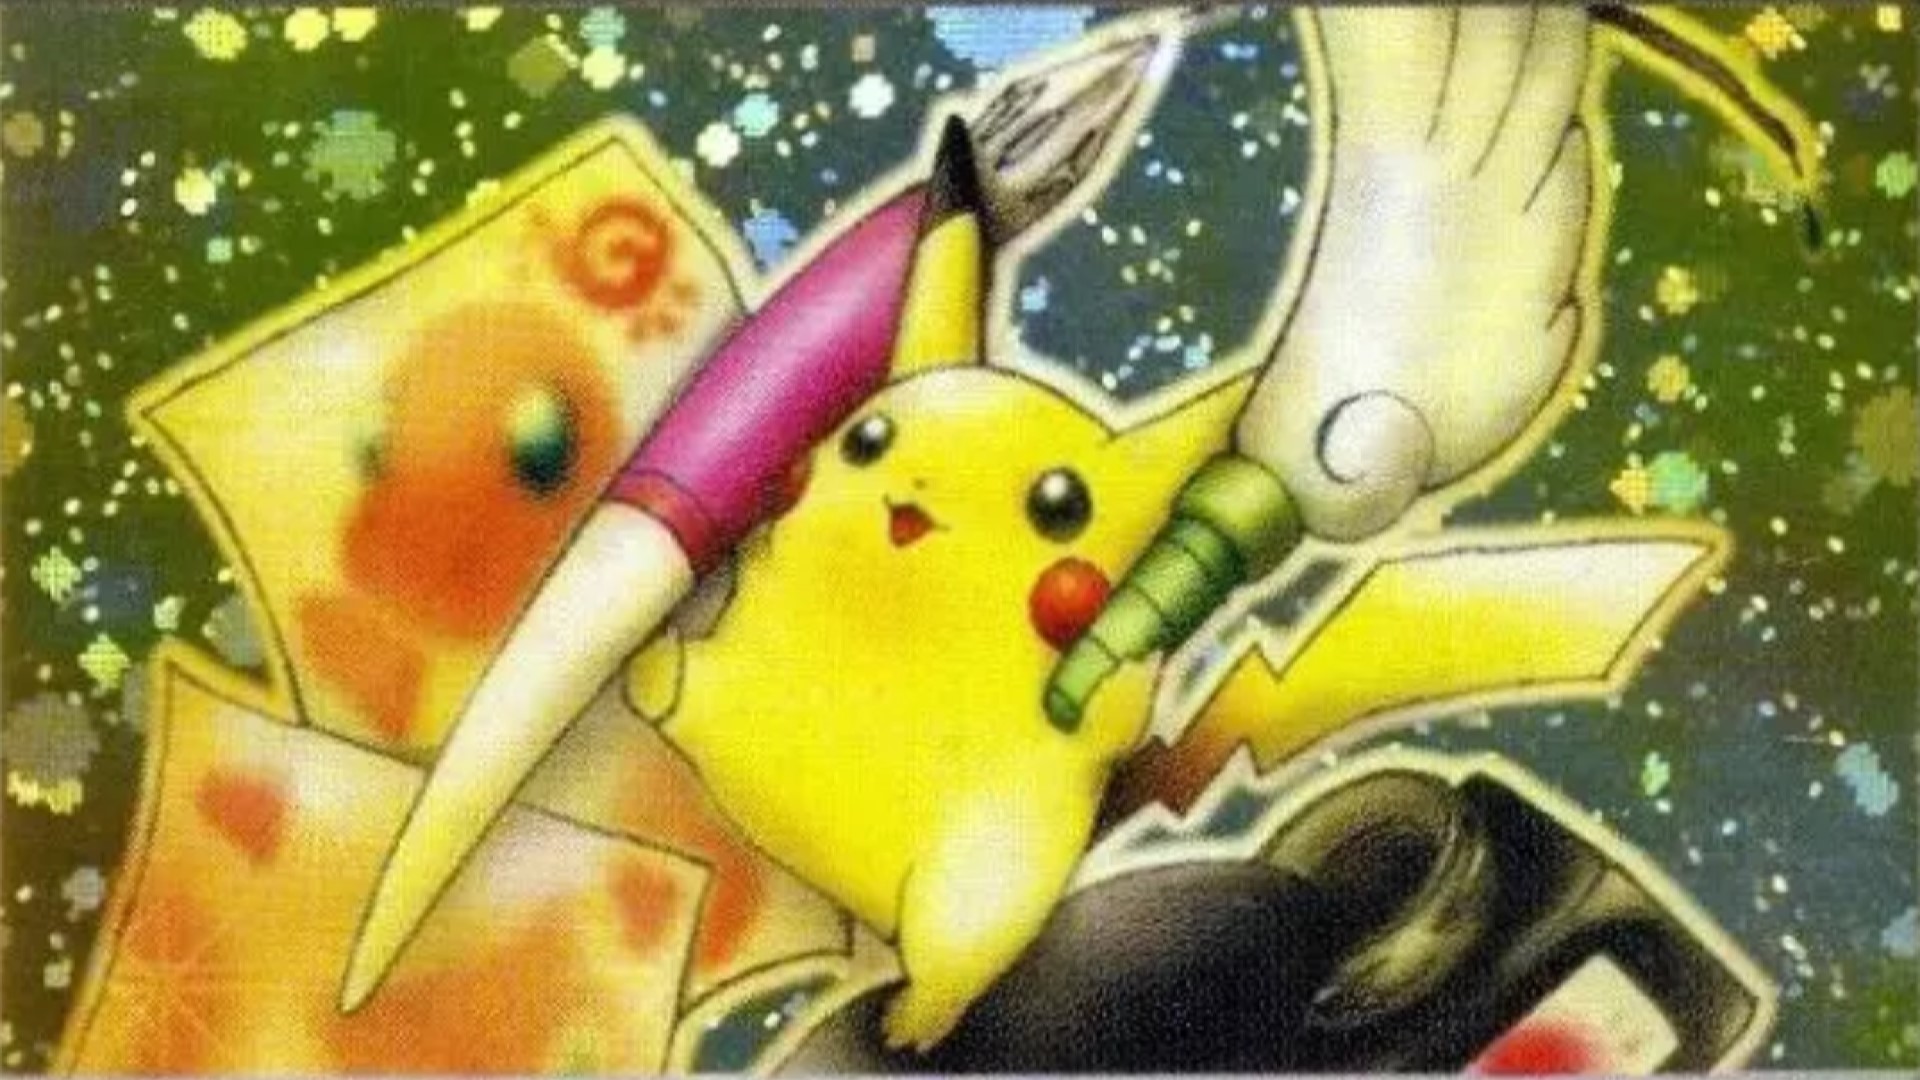 Rare Pikachu Illustrator Pokémon card sells for $2 million